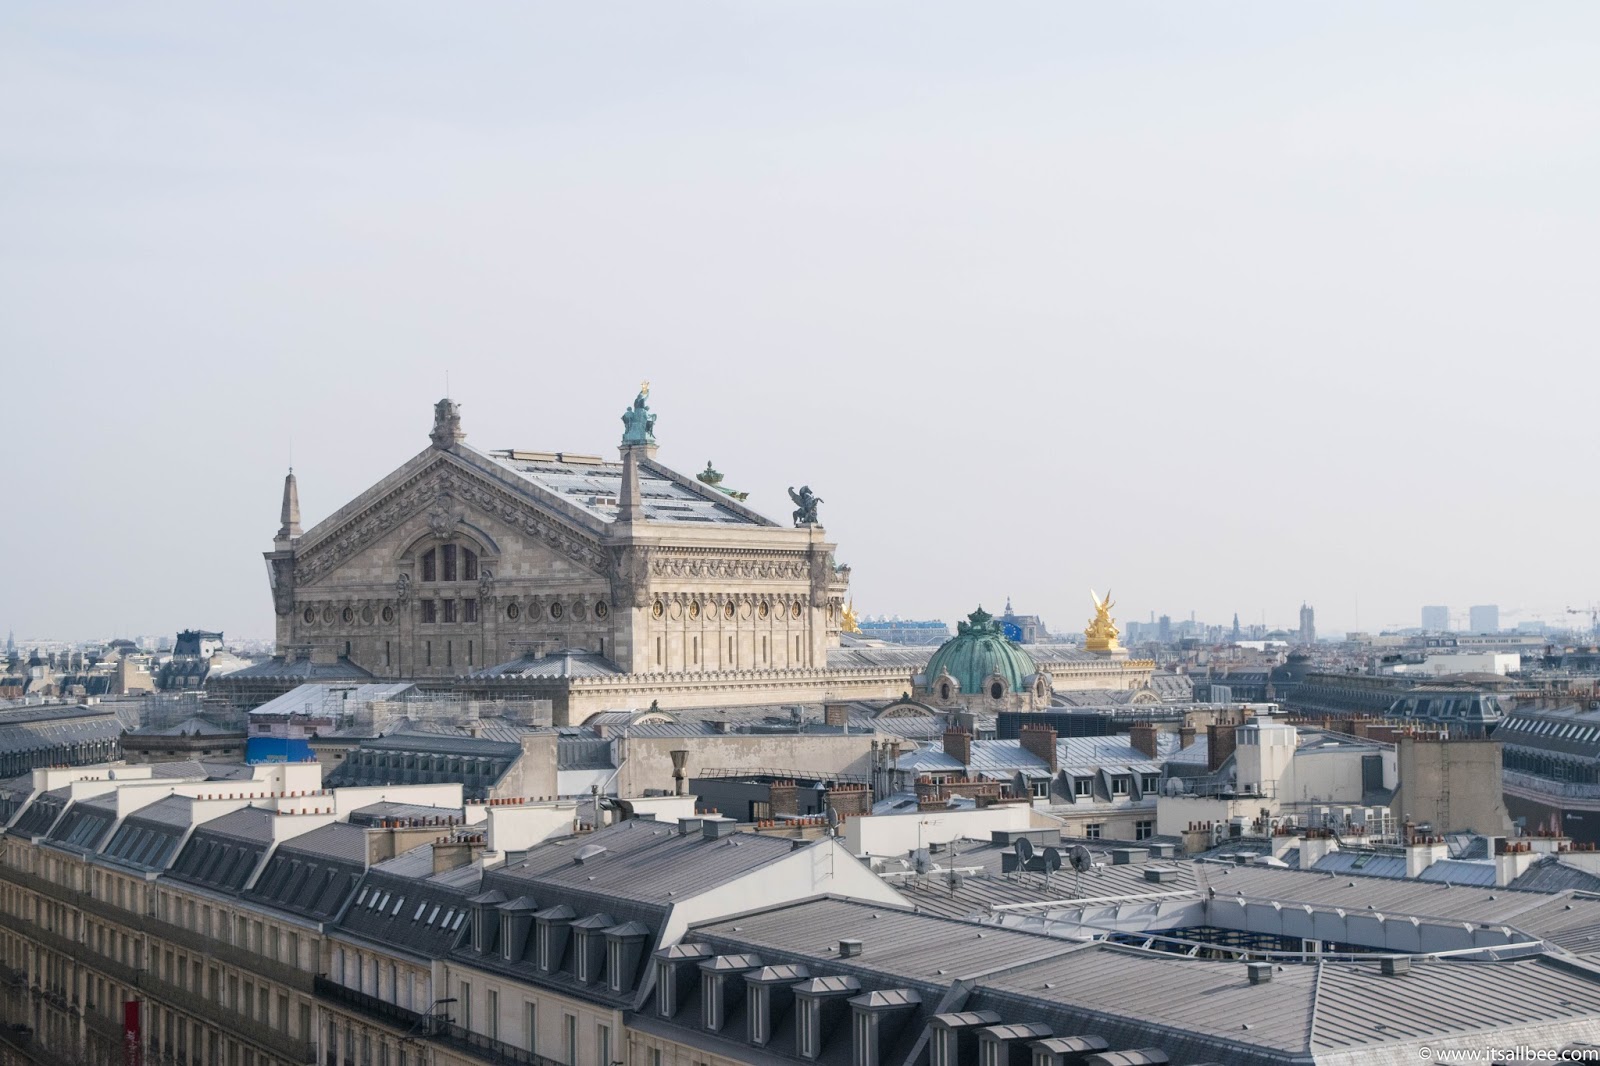 Cafe Deli-Cieux - Parisian Brunch with Panoramic Views of Paris - Printemps Rooftop Terrace